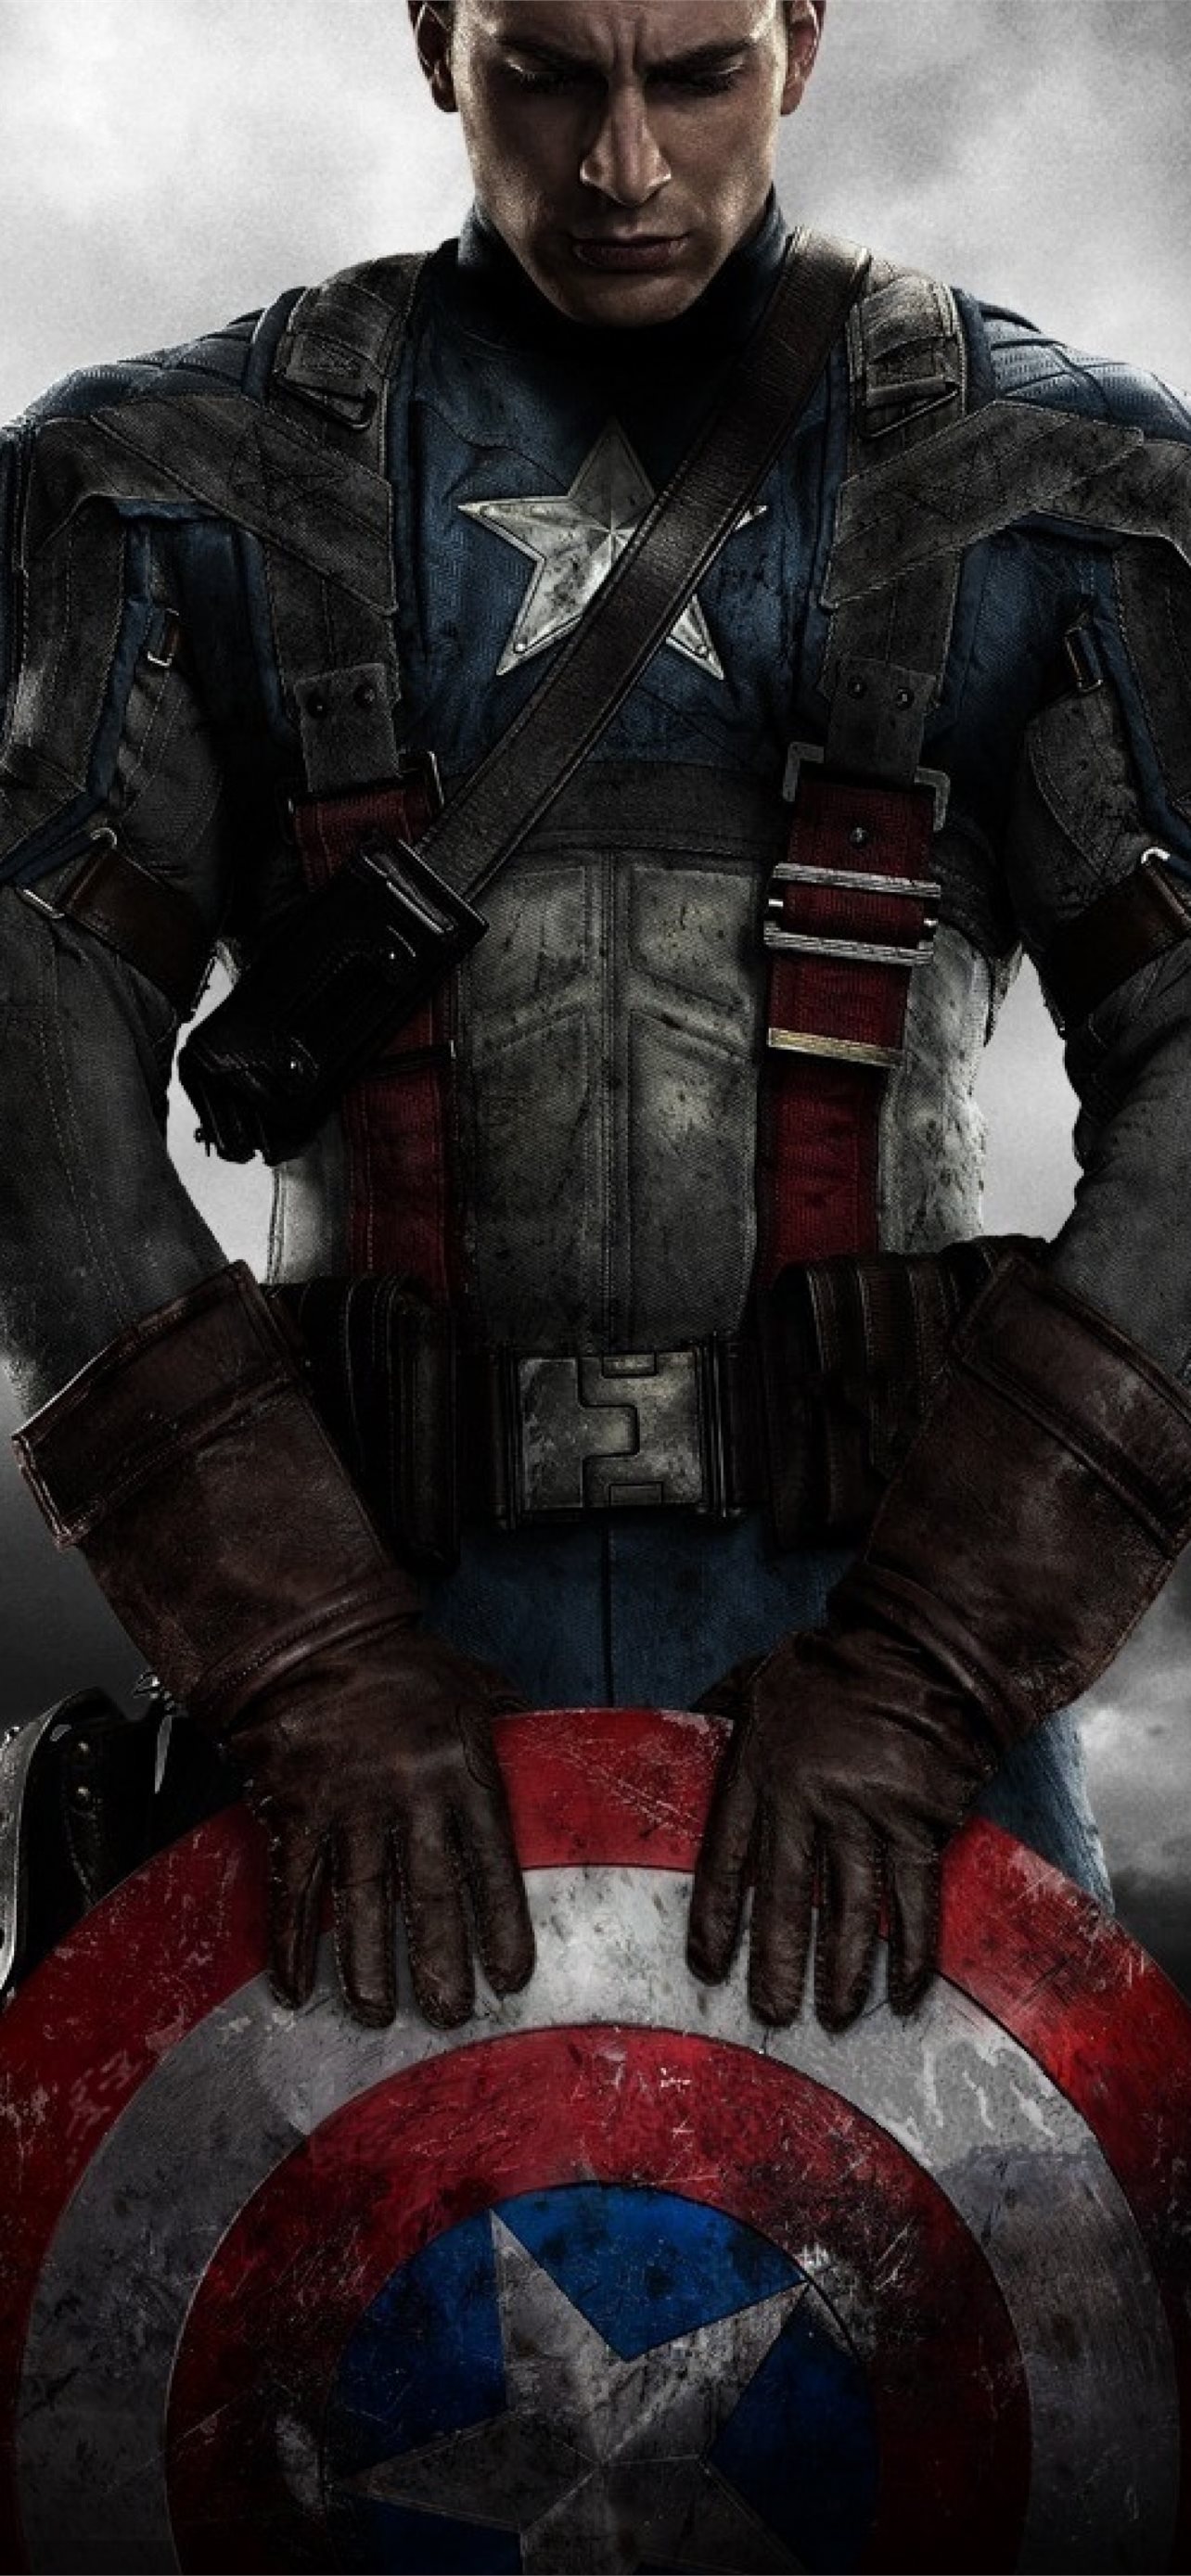 Best Captain america iPhone HD Wallpaper